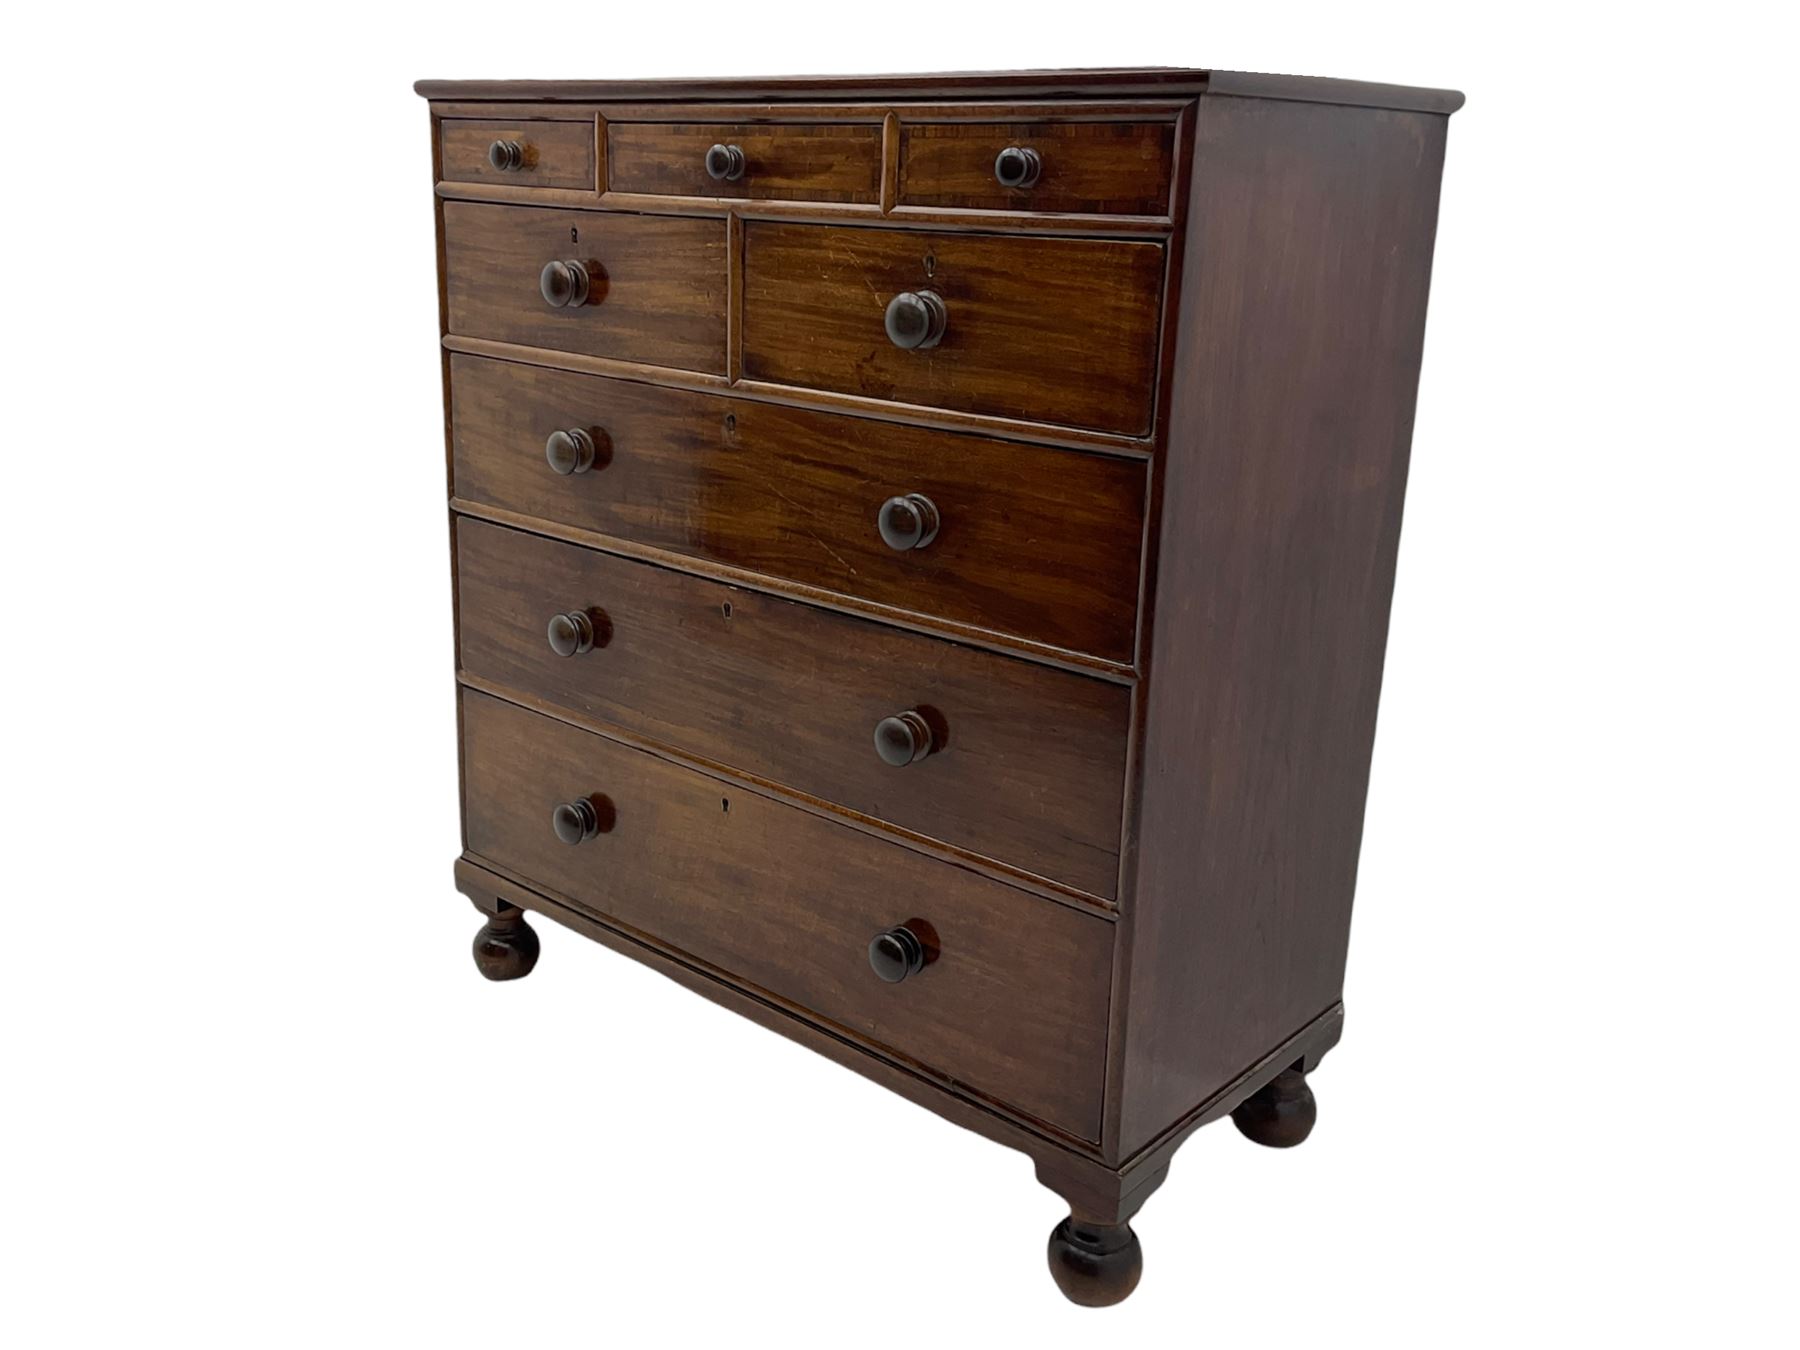 19th century mahogany chest - Image 2 of 14